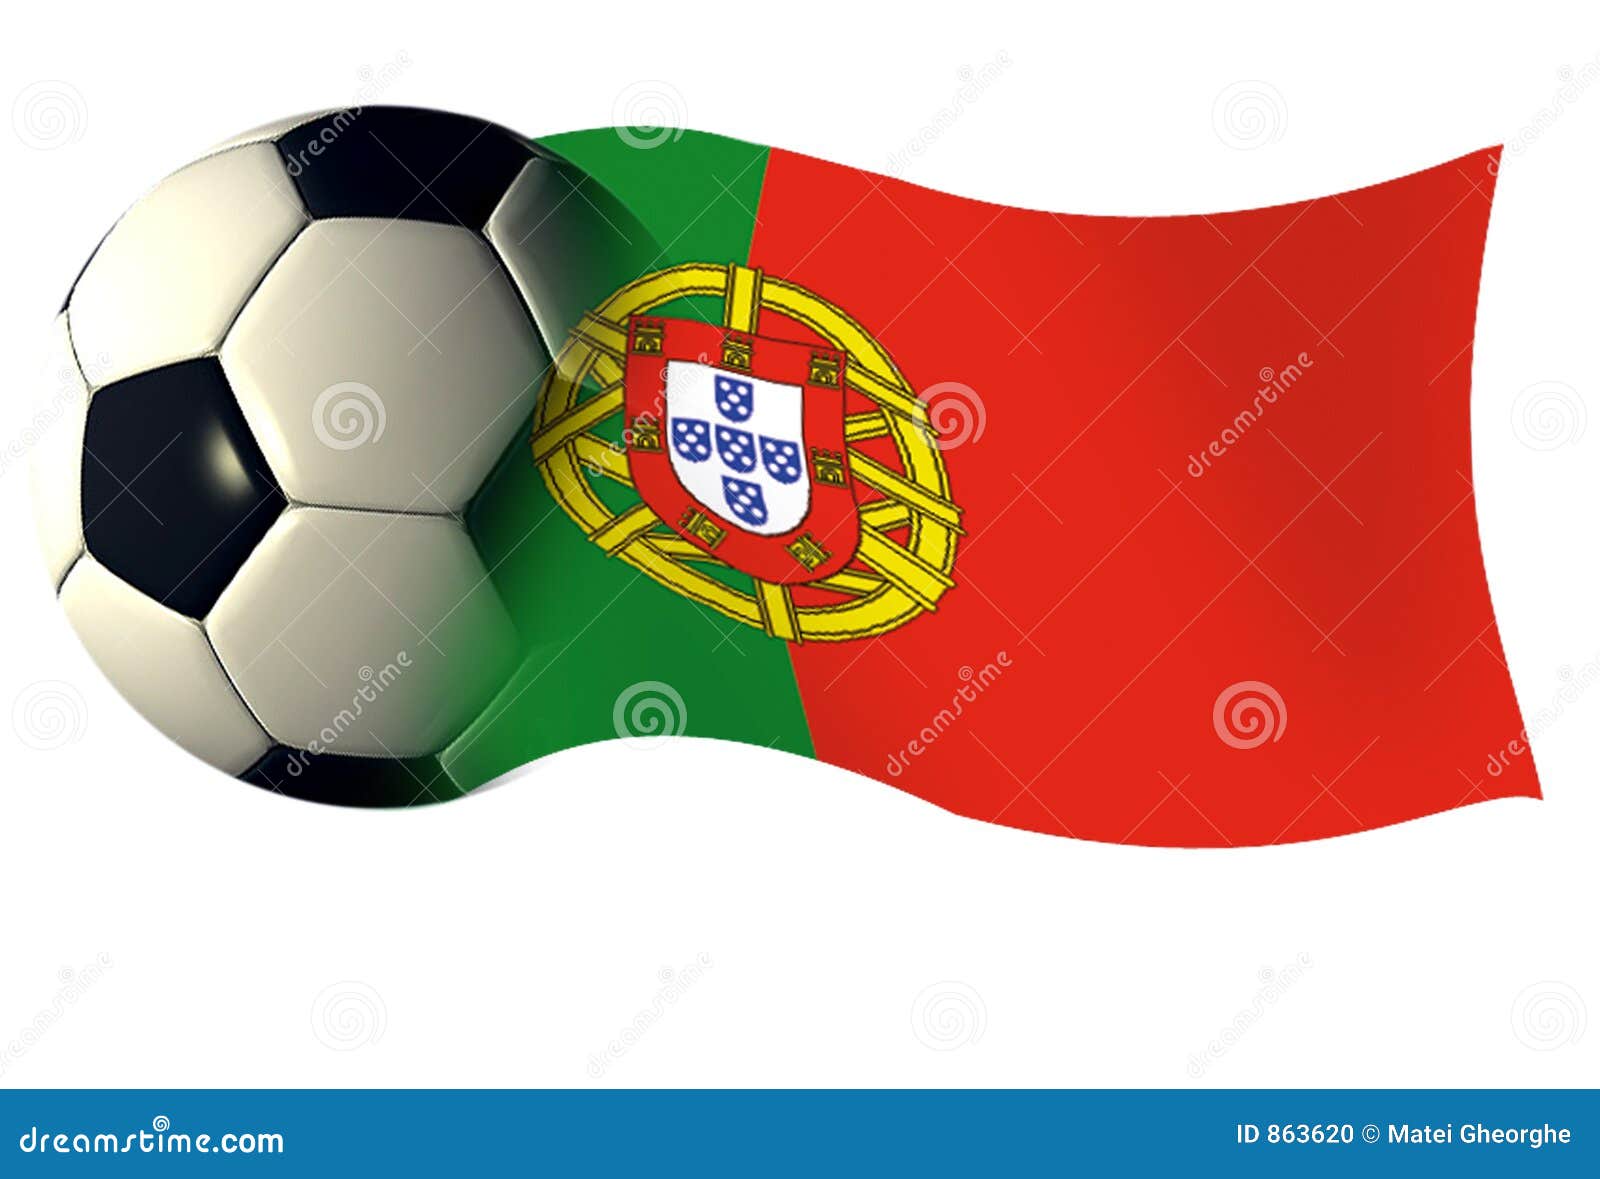 clipart portugal flag - photo #16